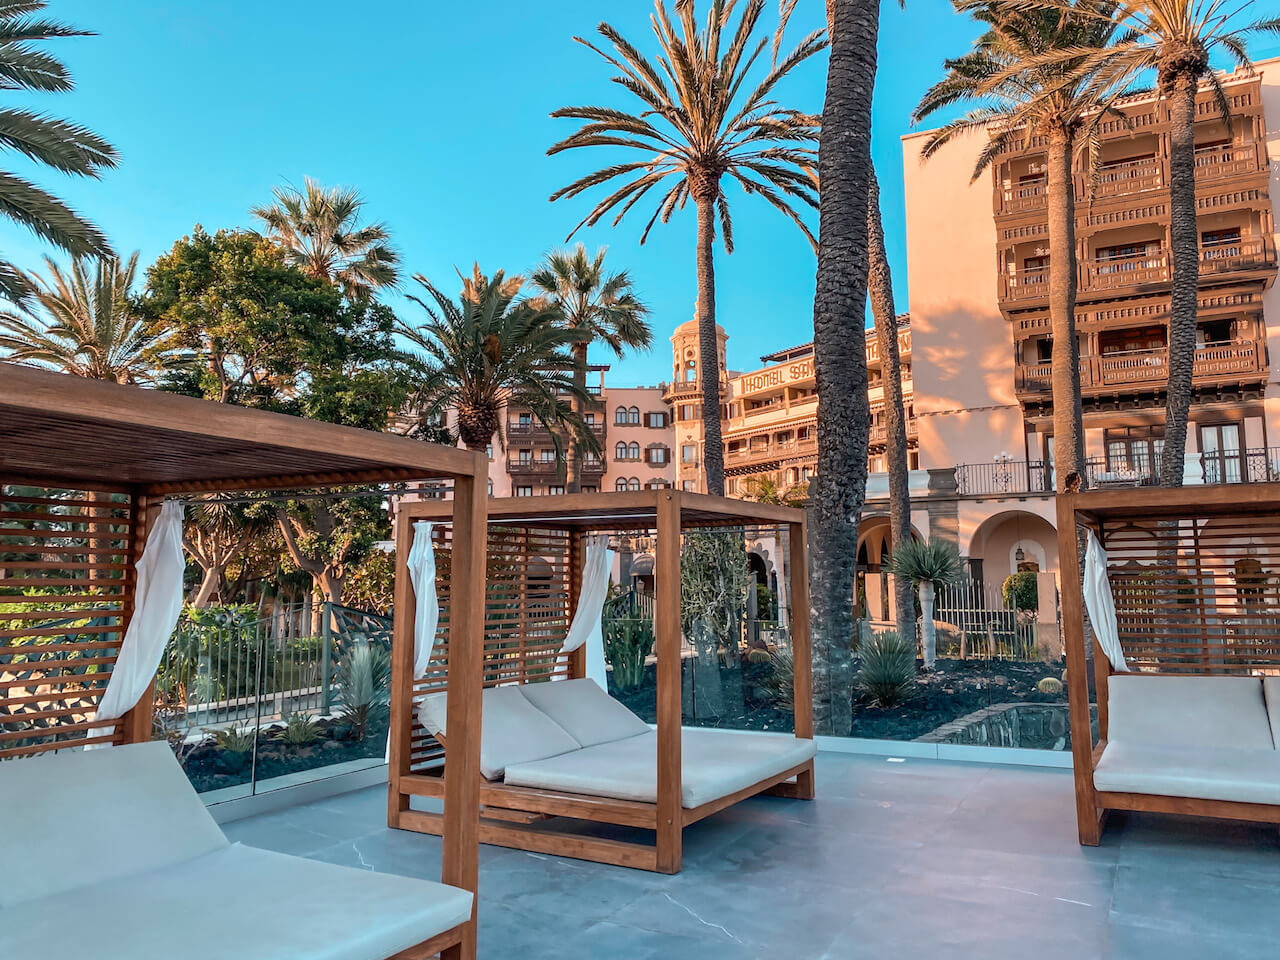 Bali beds around Pool at Santa Catalina Hotel in Las Palmas de Gran Canaria